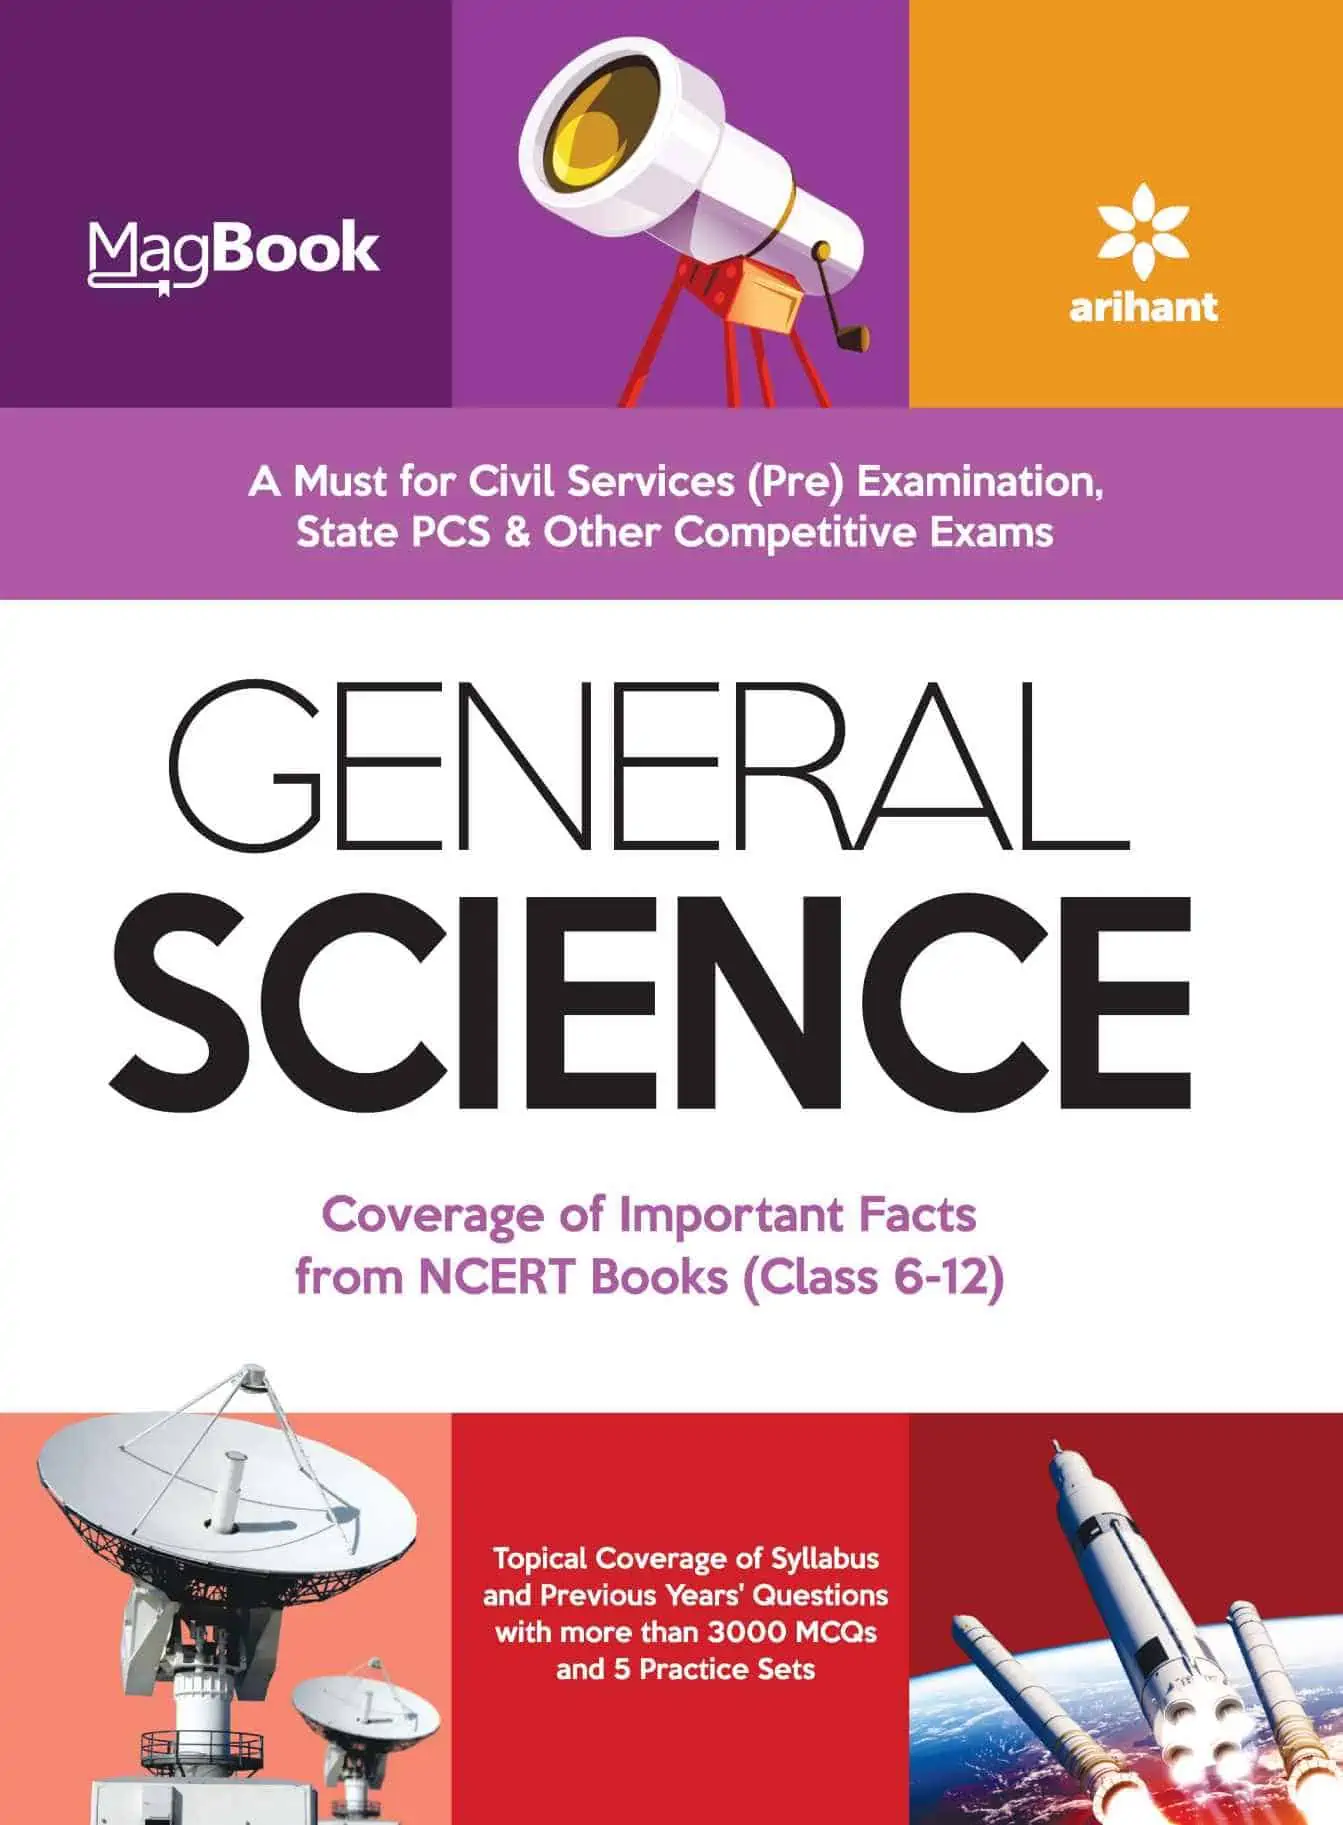 Arihant MagBook General Science PDF [English Edition]